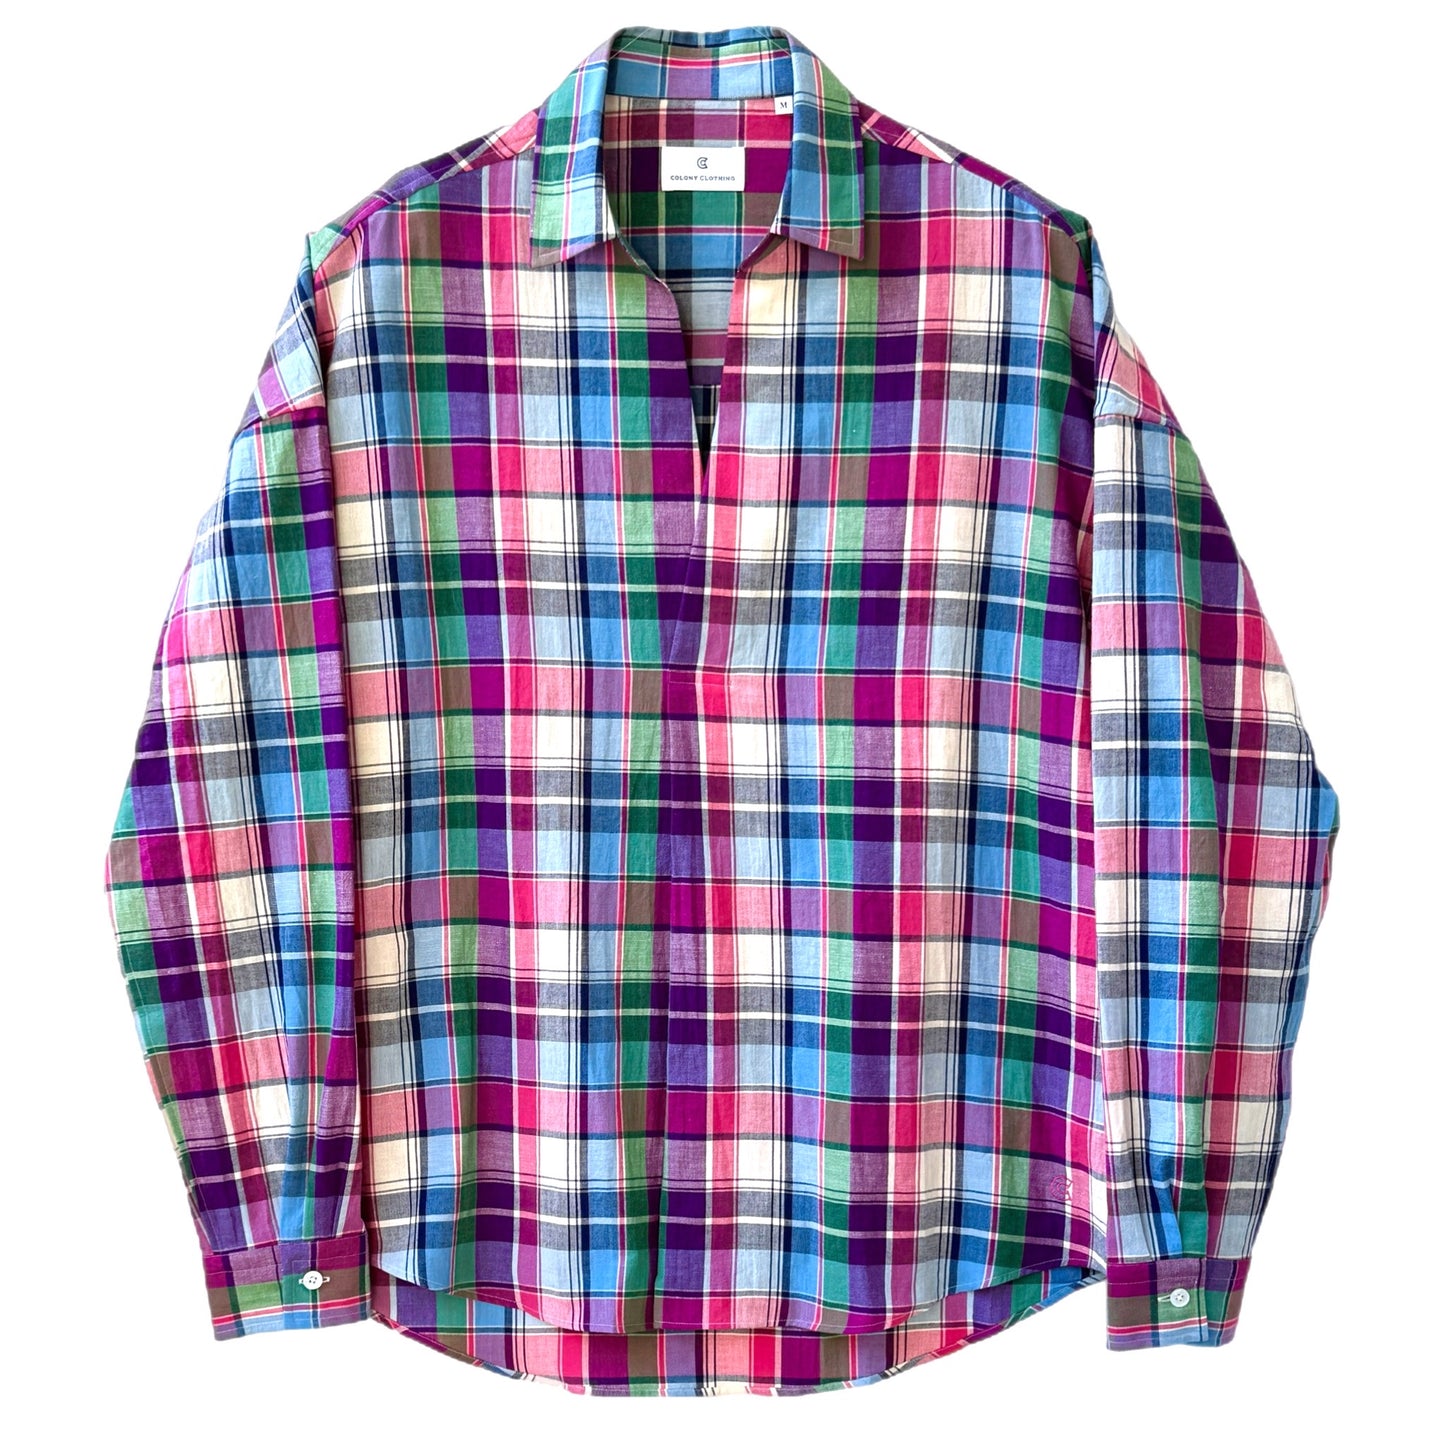 COLONY CLOTHING / プールサイドシャツ ピンクチェック / CC2401-SH02-02